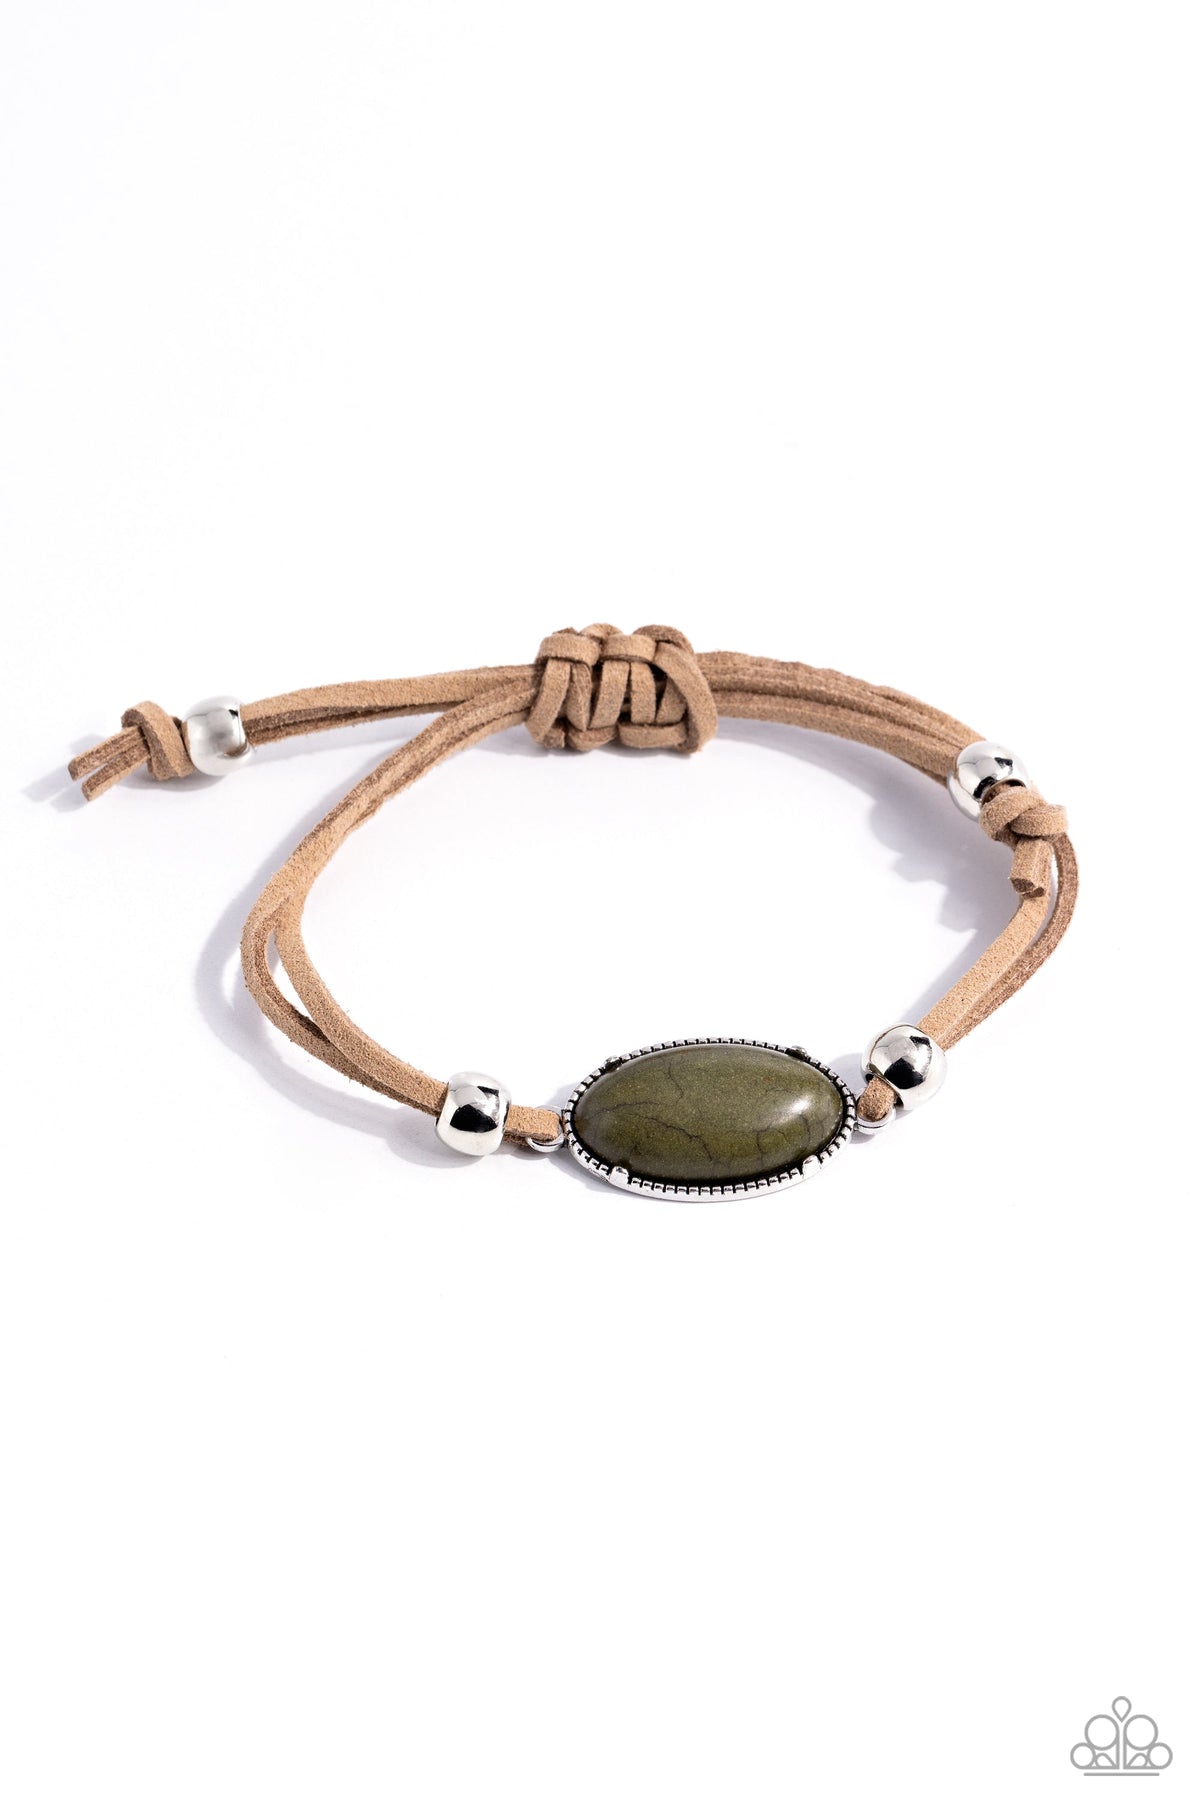 Desertscape Drive Green Stone &amp; Suede Urban Bracelet - Paparazzi Accessories- lightbox - CarasShop.com - $5 Jewelry by Cara Jewels